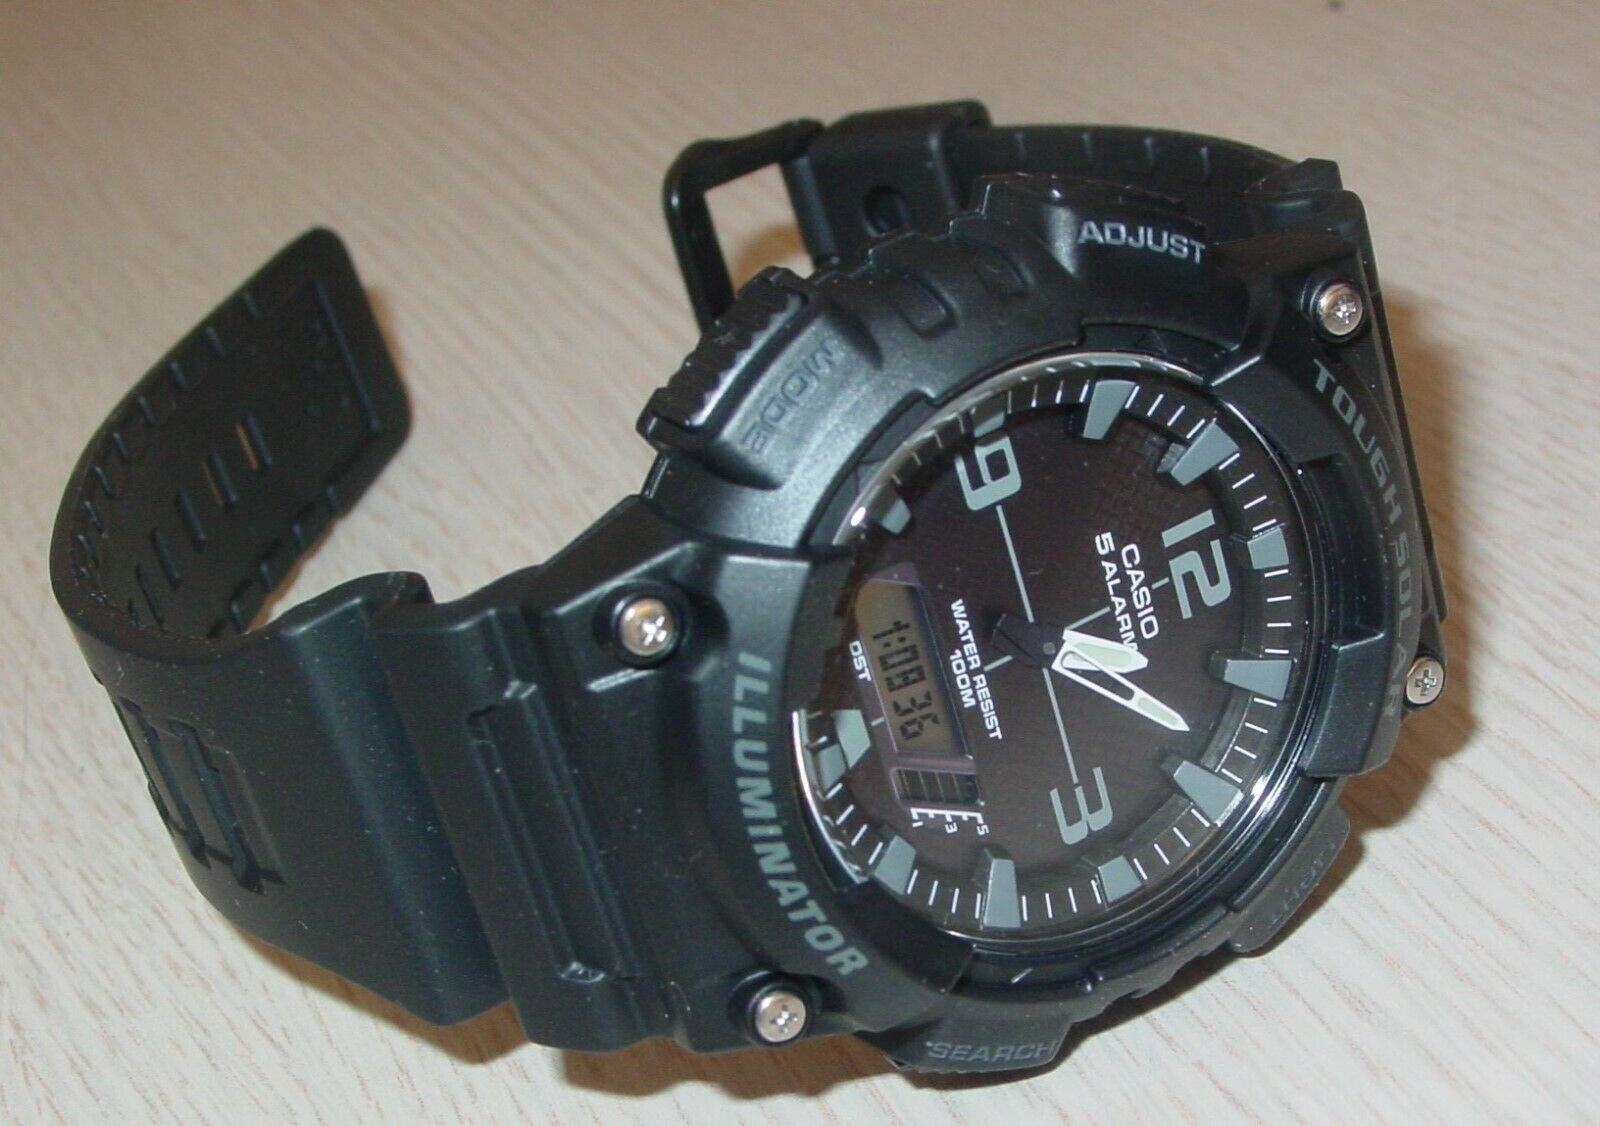 | Illuminator 5 WatchCharts Alarm Casio Solar Tough 5208 AQ-S810W Black Analog Watch